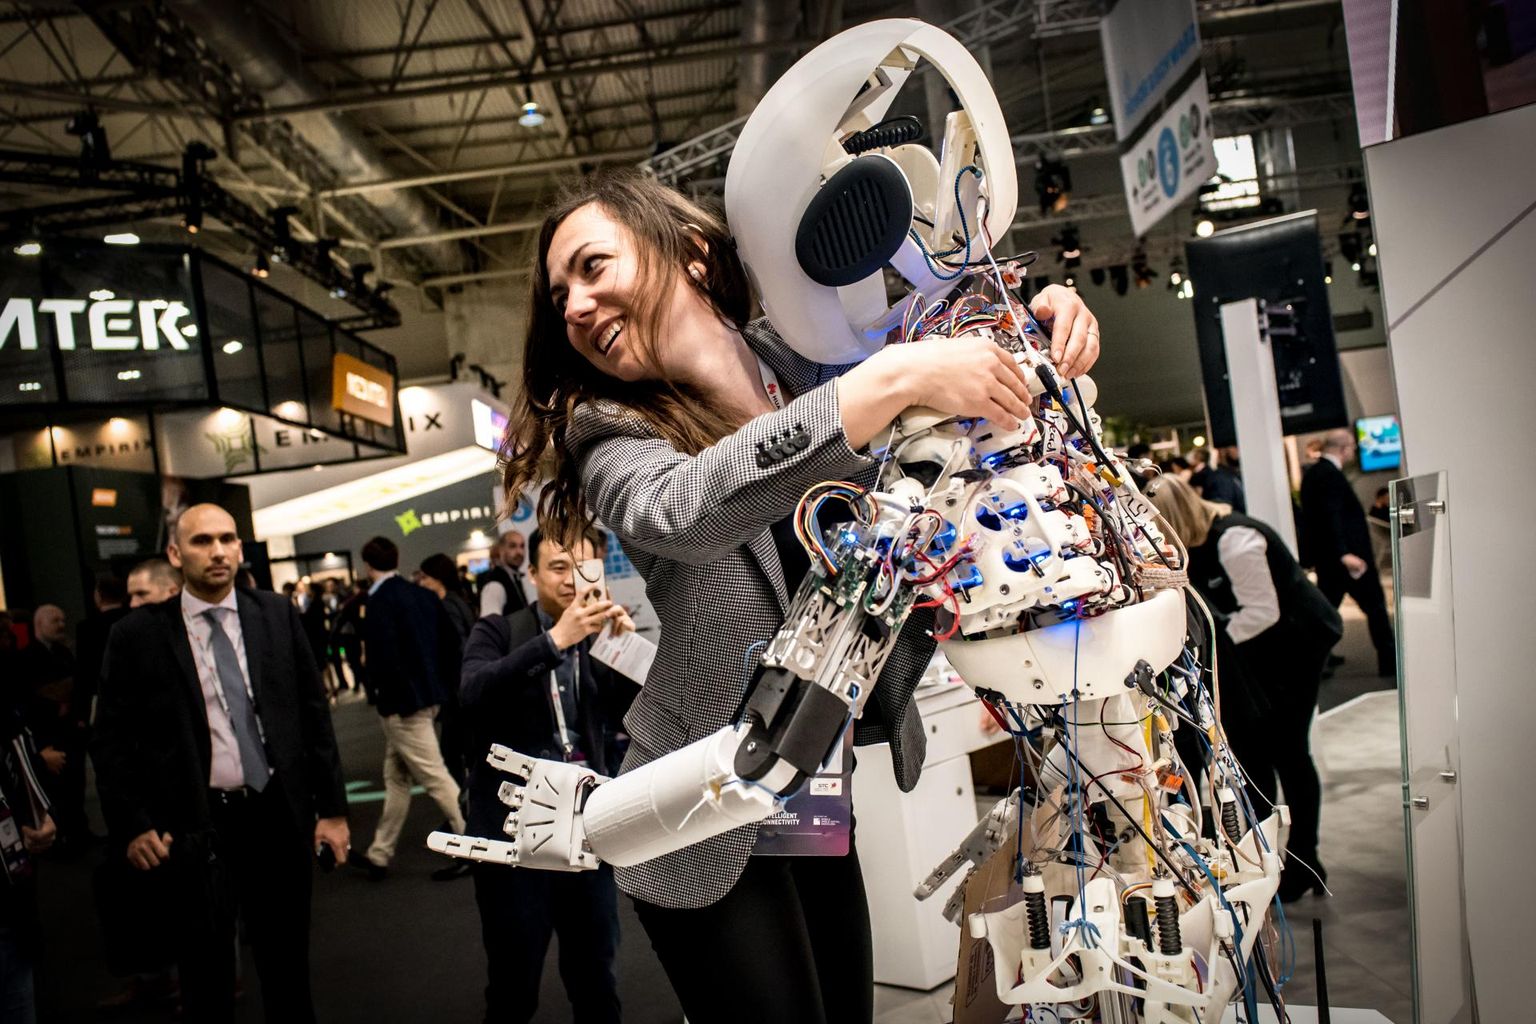 Naine embamas tasuta kallistusi jagavat robotit. 